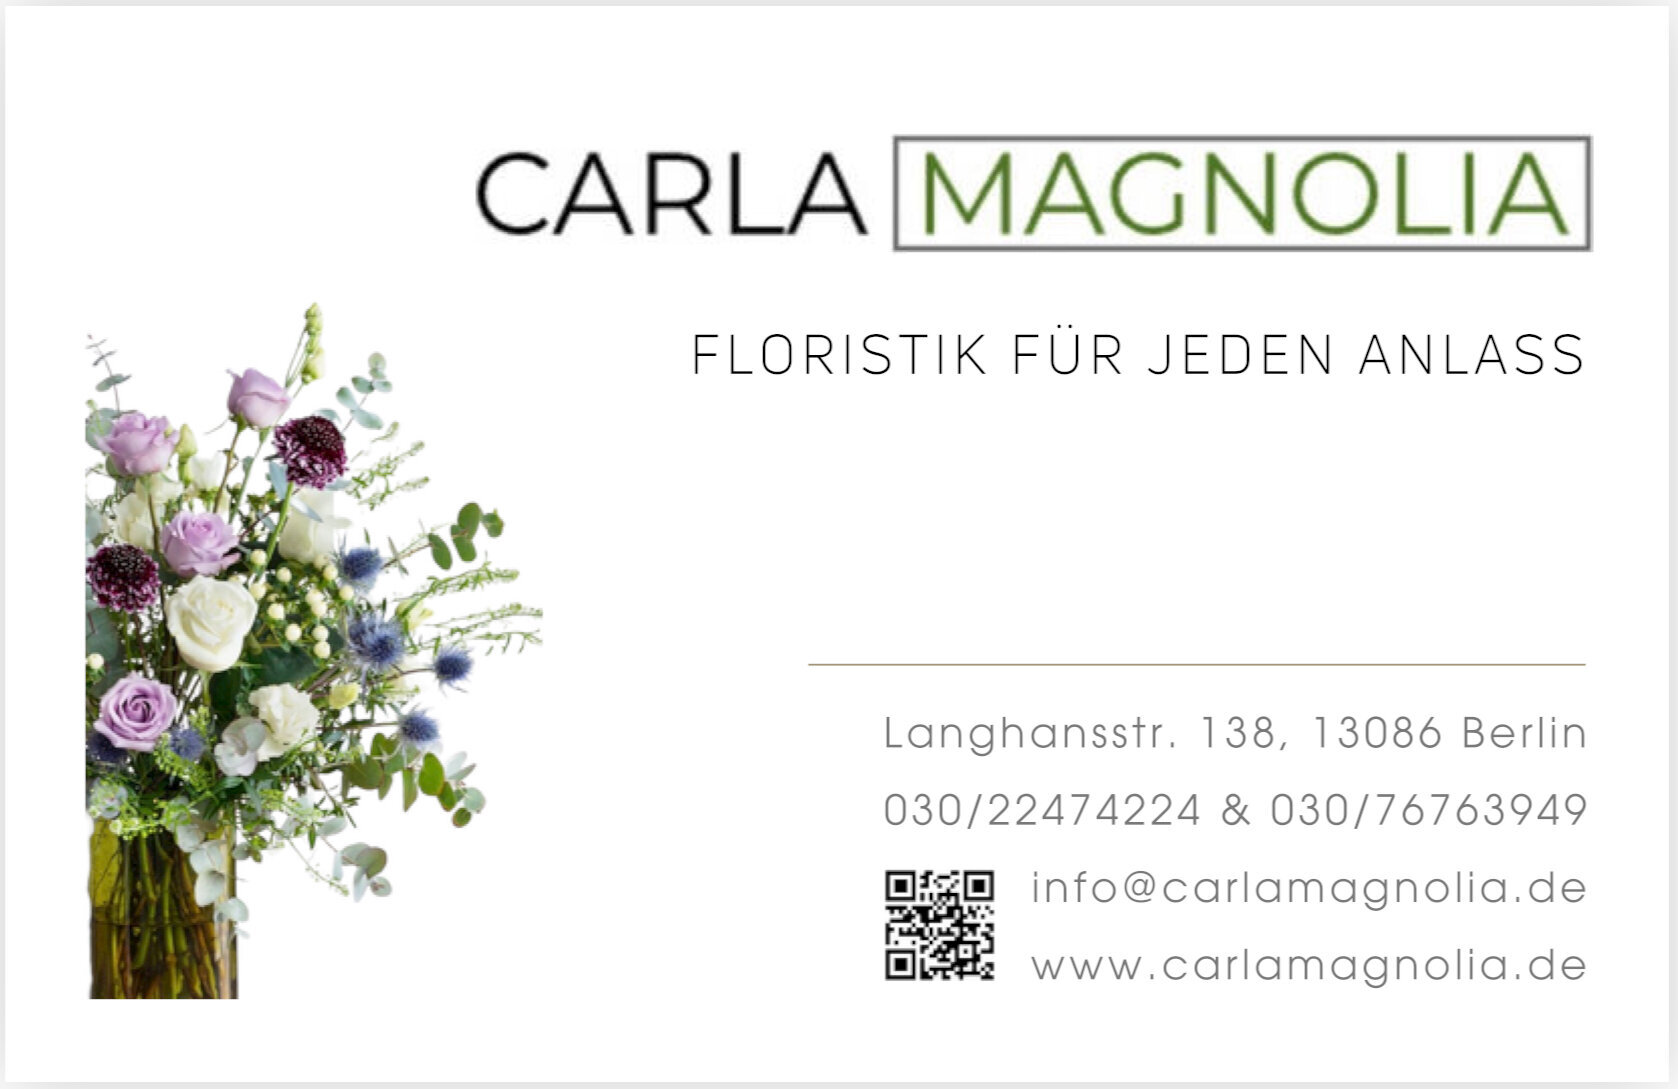 Carla Magnolia Floristik, Langhansstraße 138 in Berlin